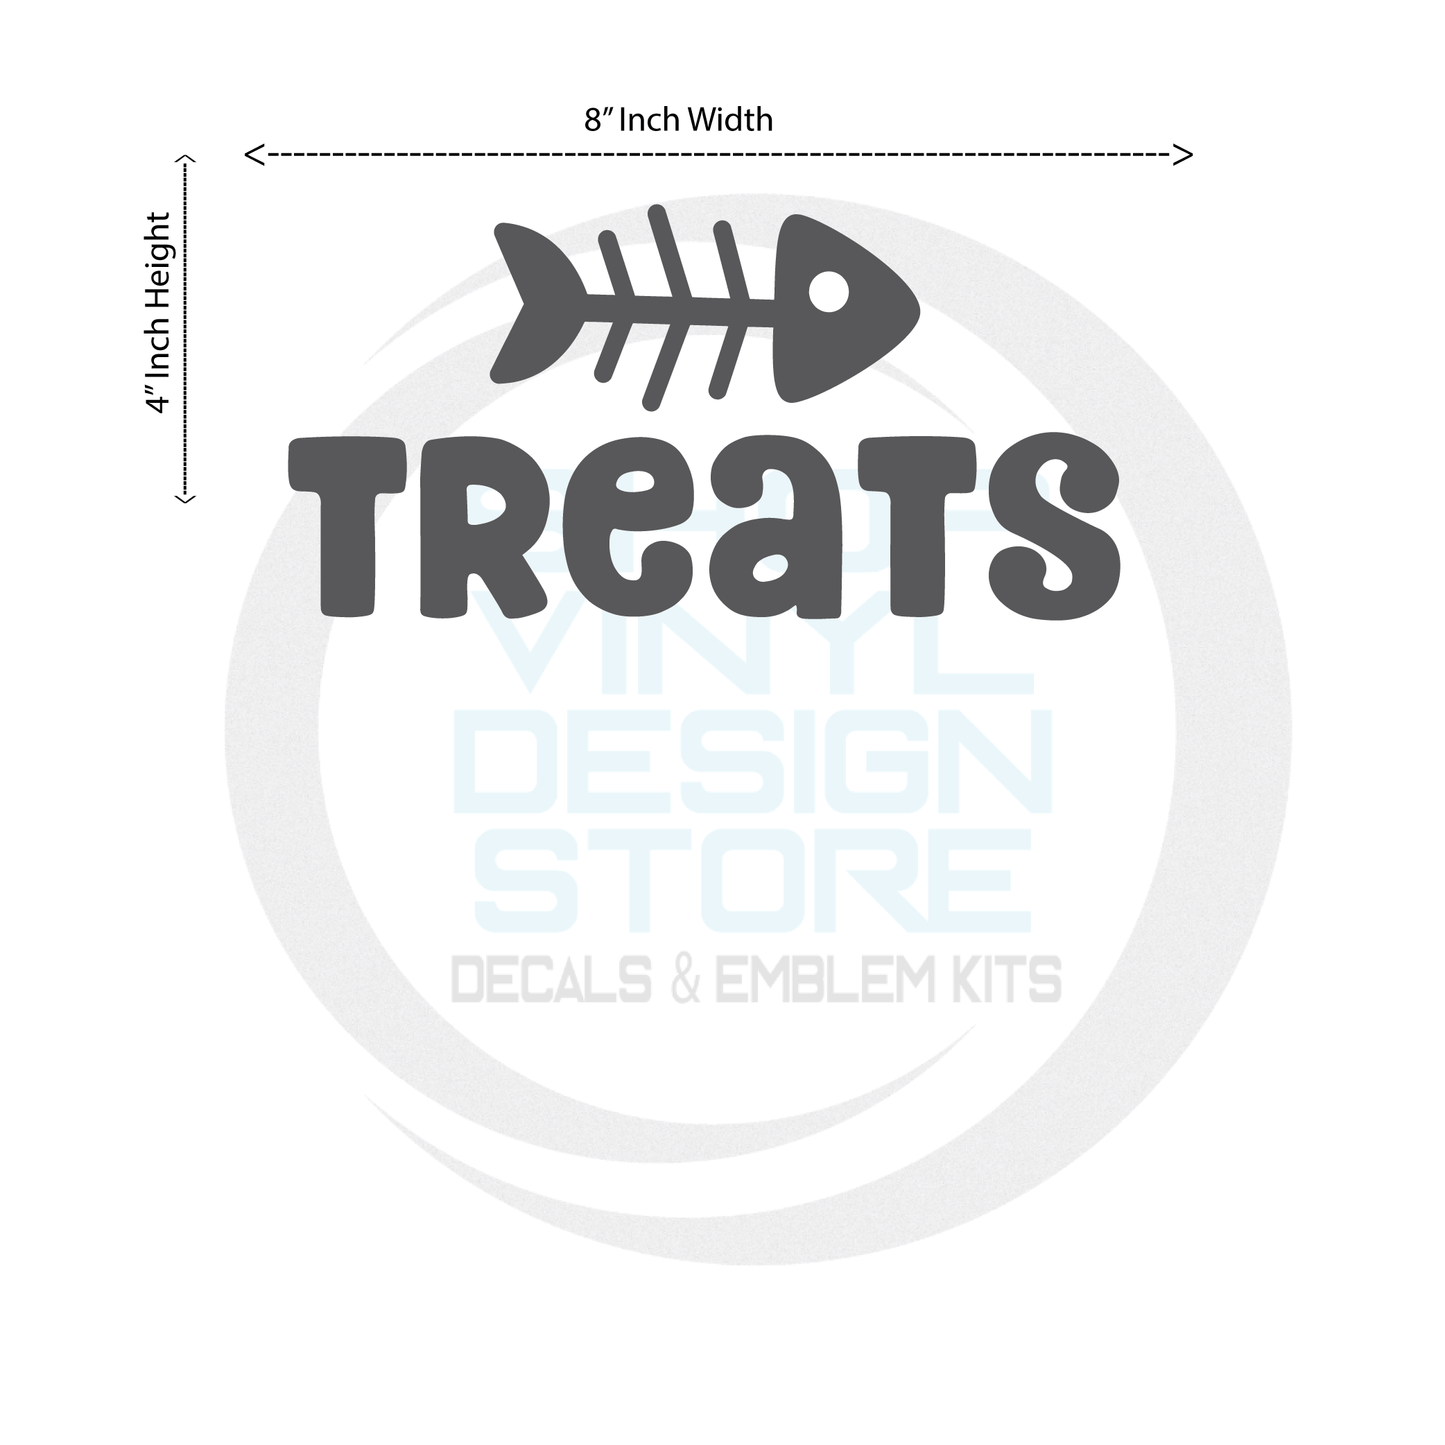 ShopVinylDesignStore.com Treats with Fish Bone Wide 8"W x 4"H Shop Vinyl Design decals stickers